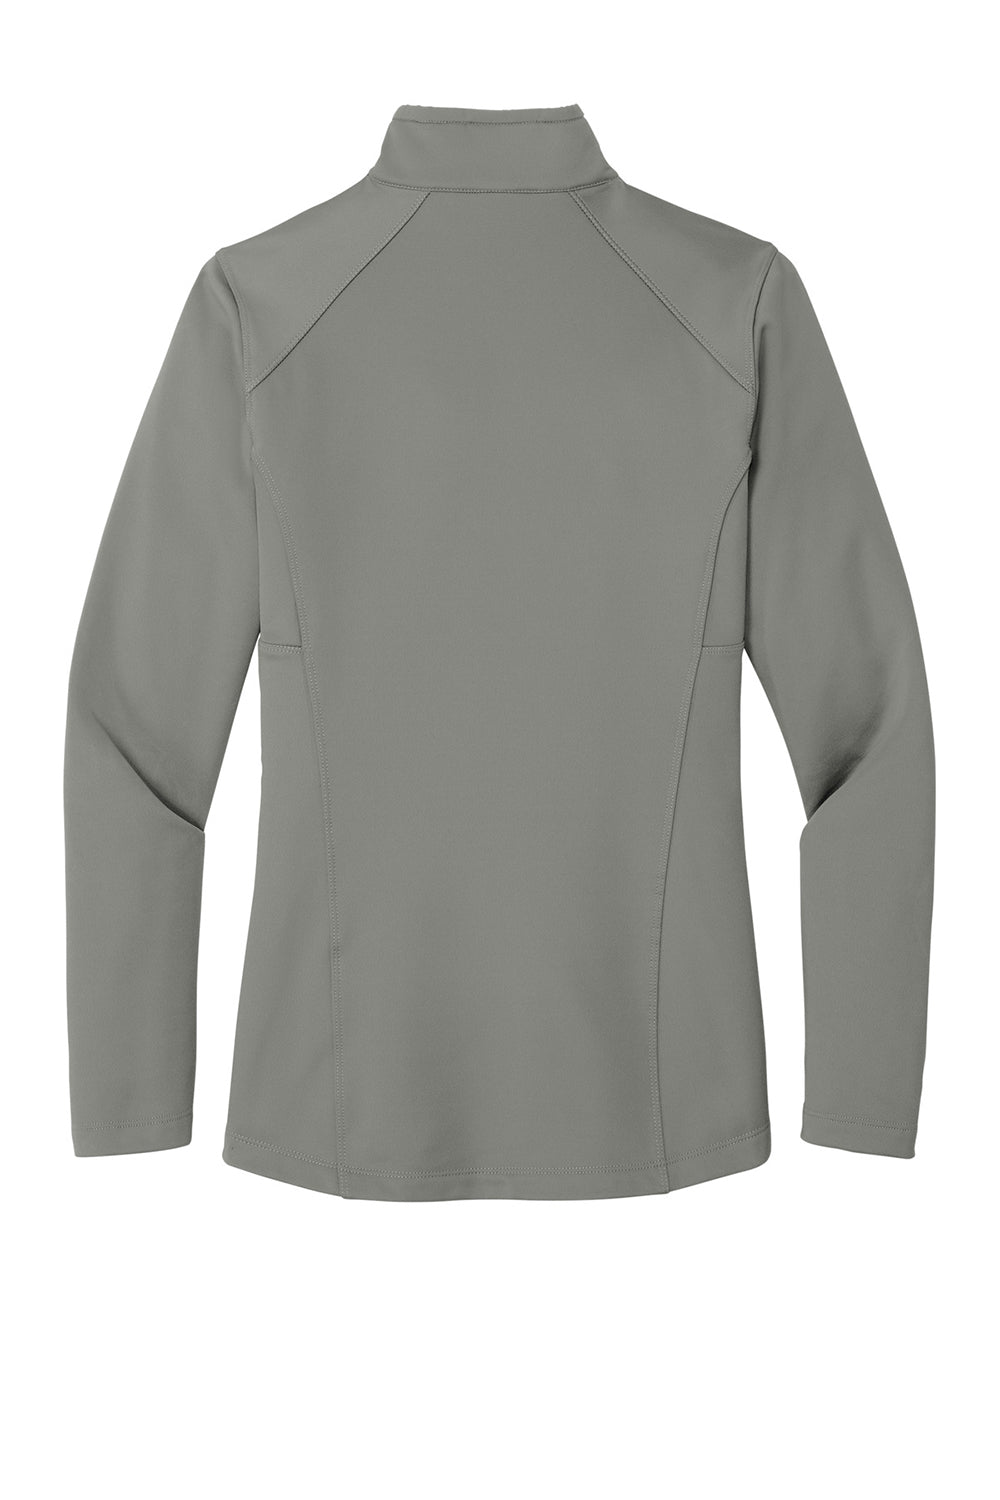 Eddie Bauer EB241 Womens Highpoint Pill Resistant Fleece Full Zip Jacket Metal Grey Flat Back